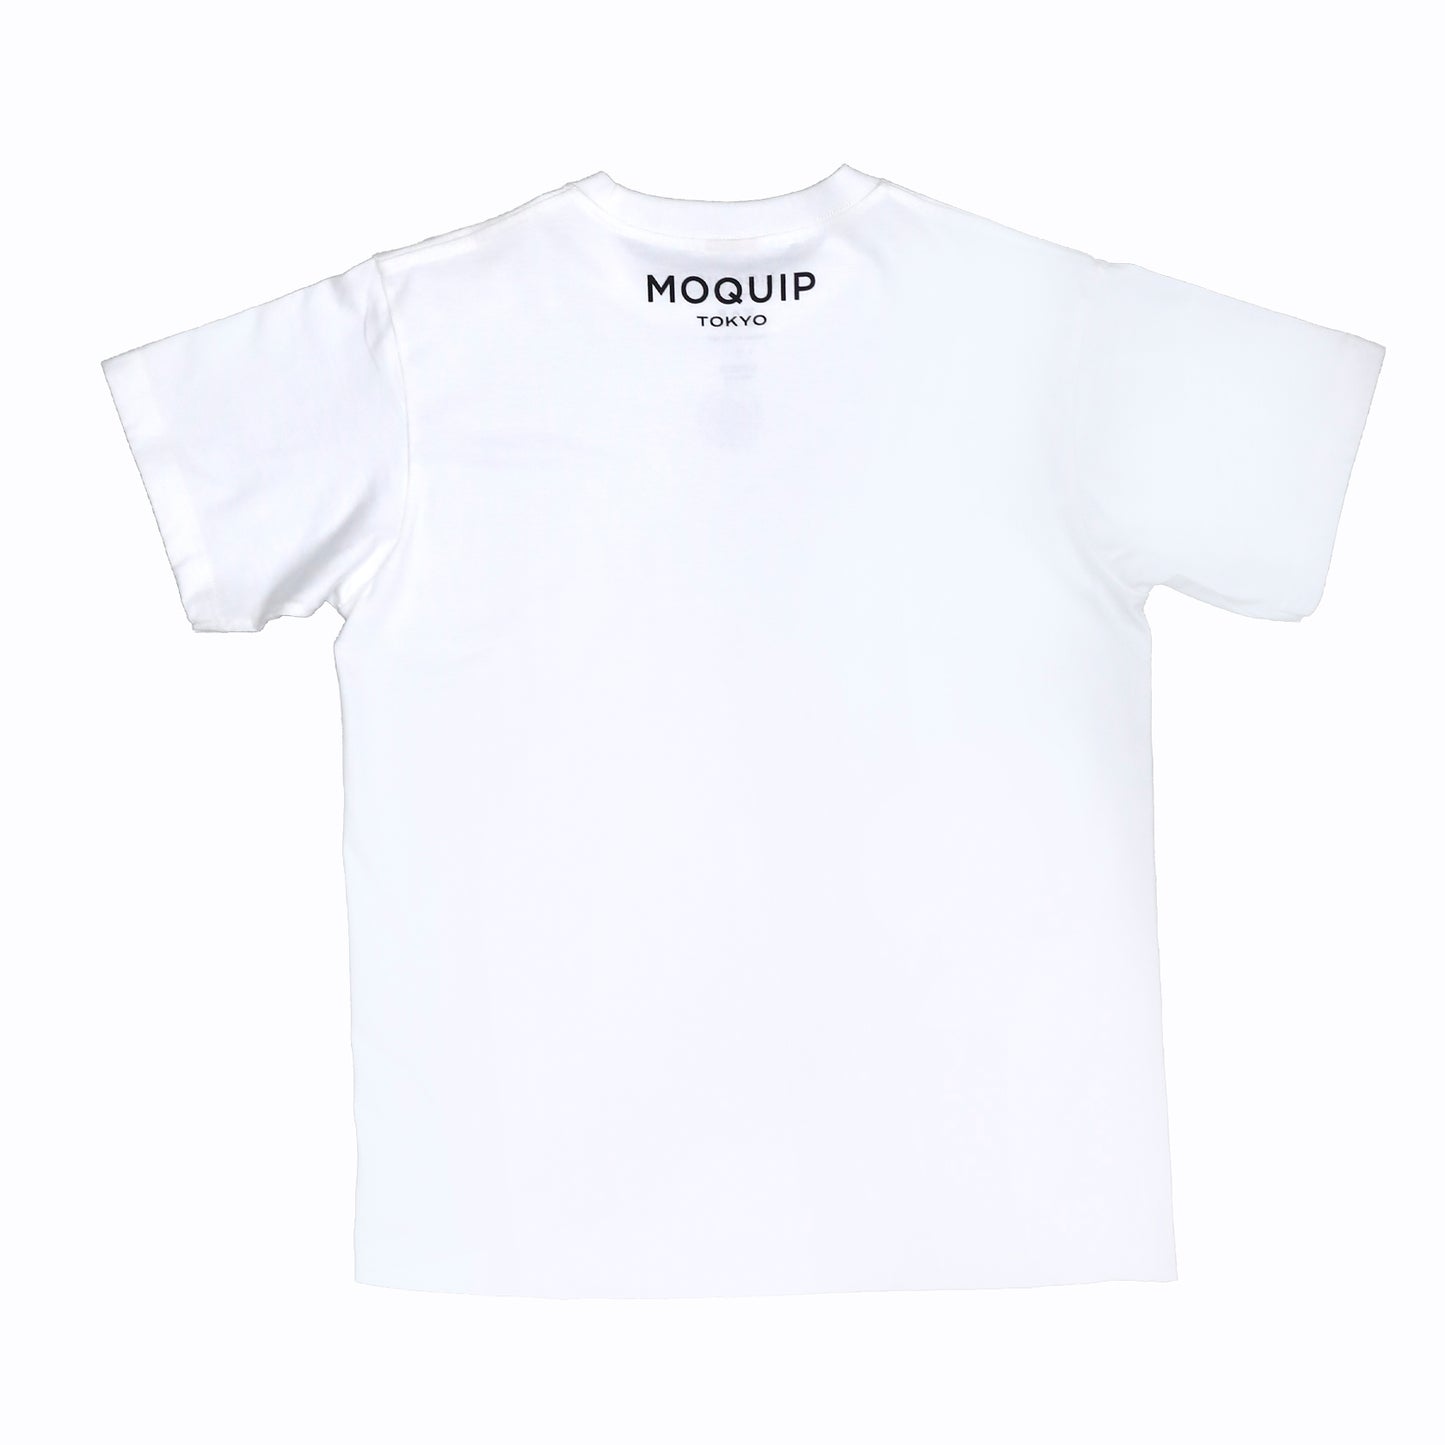 MOQUIP T-shirt logo WHITE